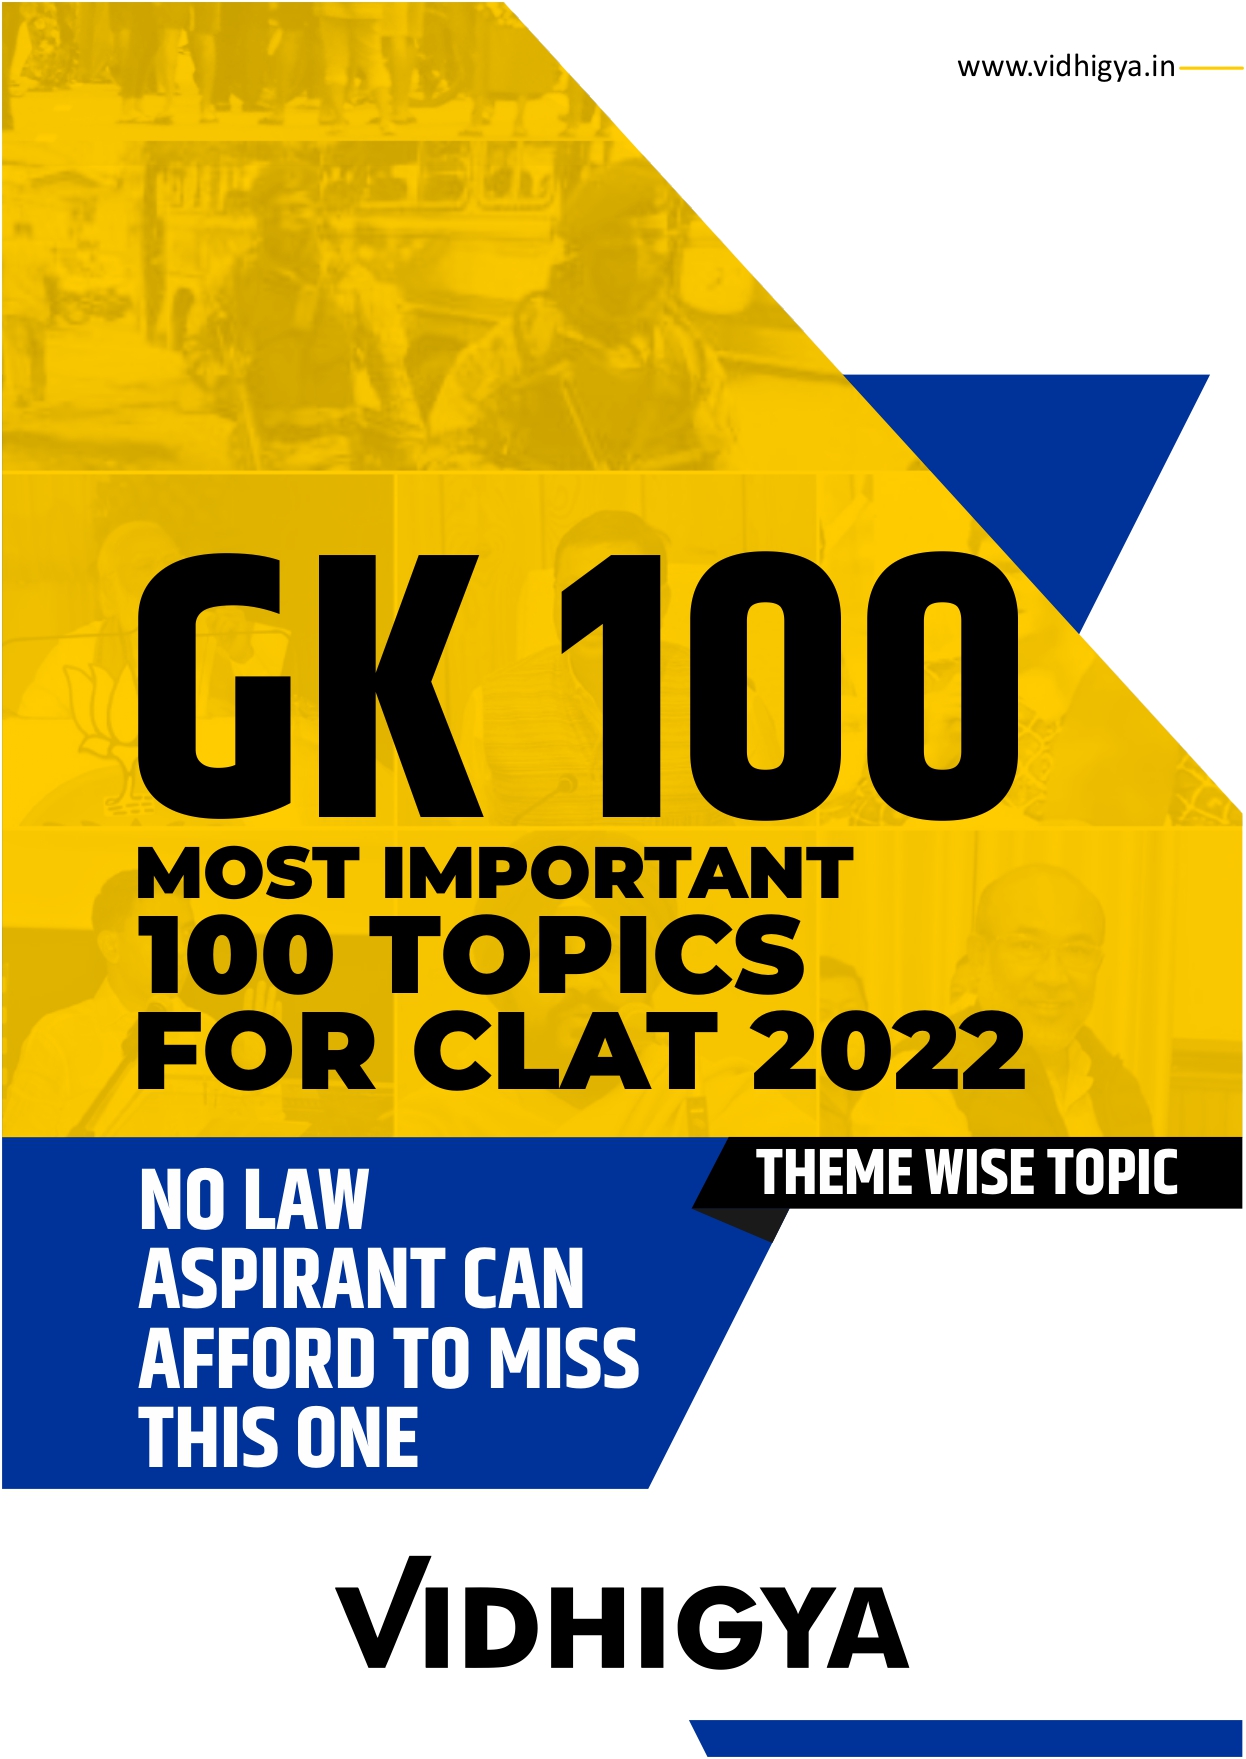 GK, CLAT, CURRENT AFFAIRS, TOPICS, CLAT 2022, CLAT 2023